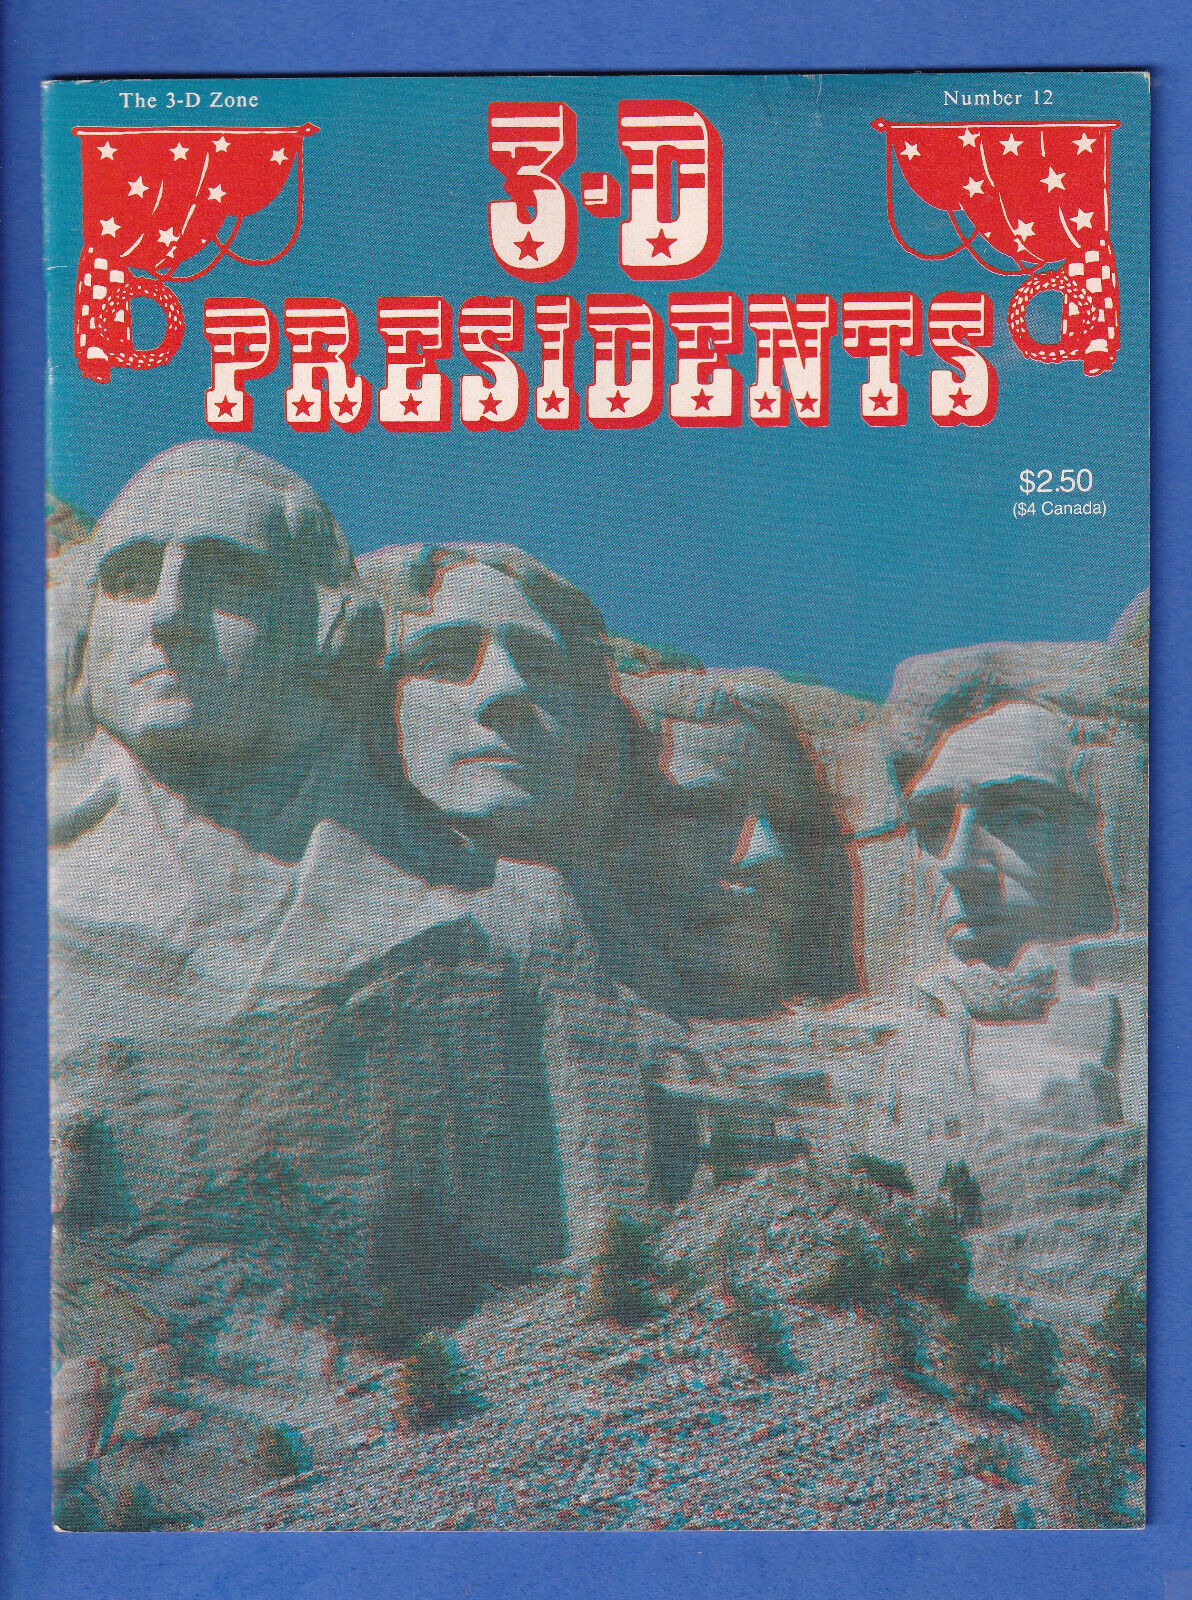 3-D Presidents 1988 3-D Zone #12 Ray Zone Mark Adler No Glasses Underground